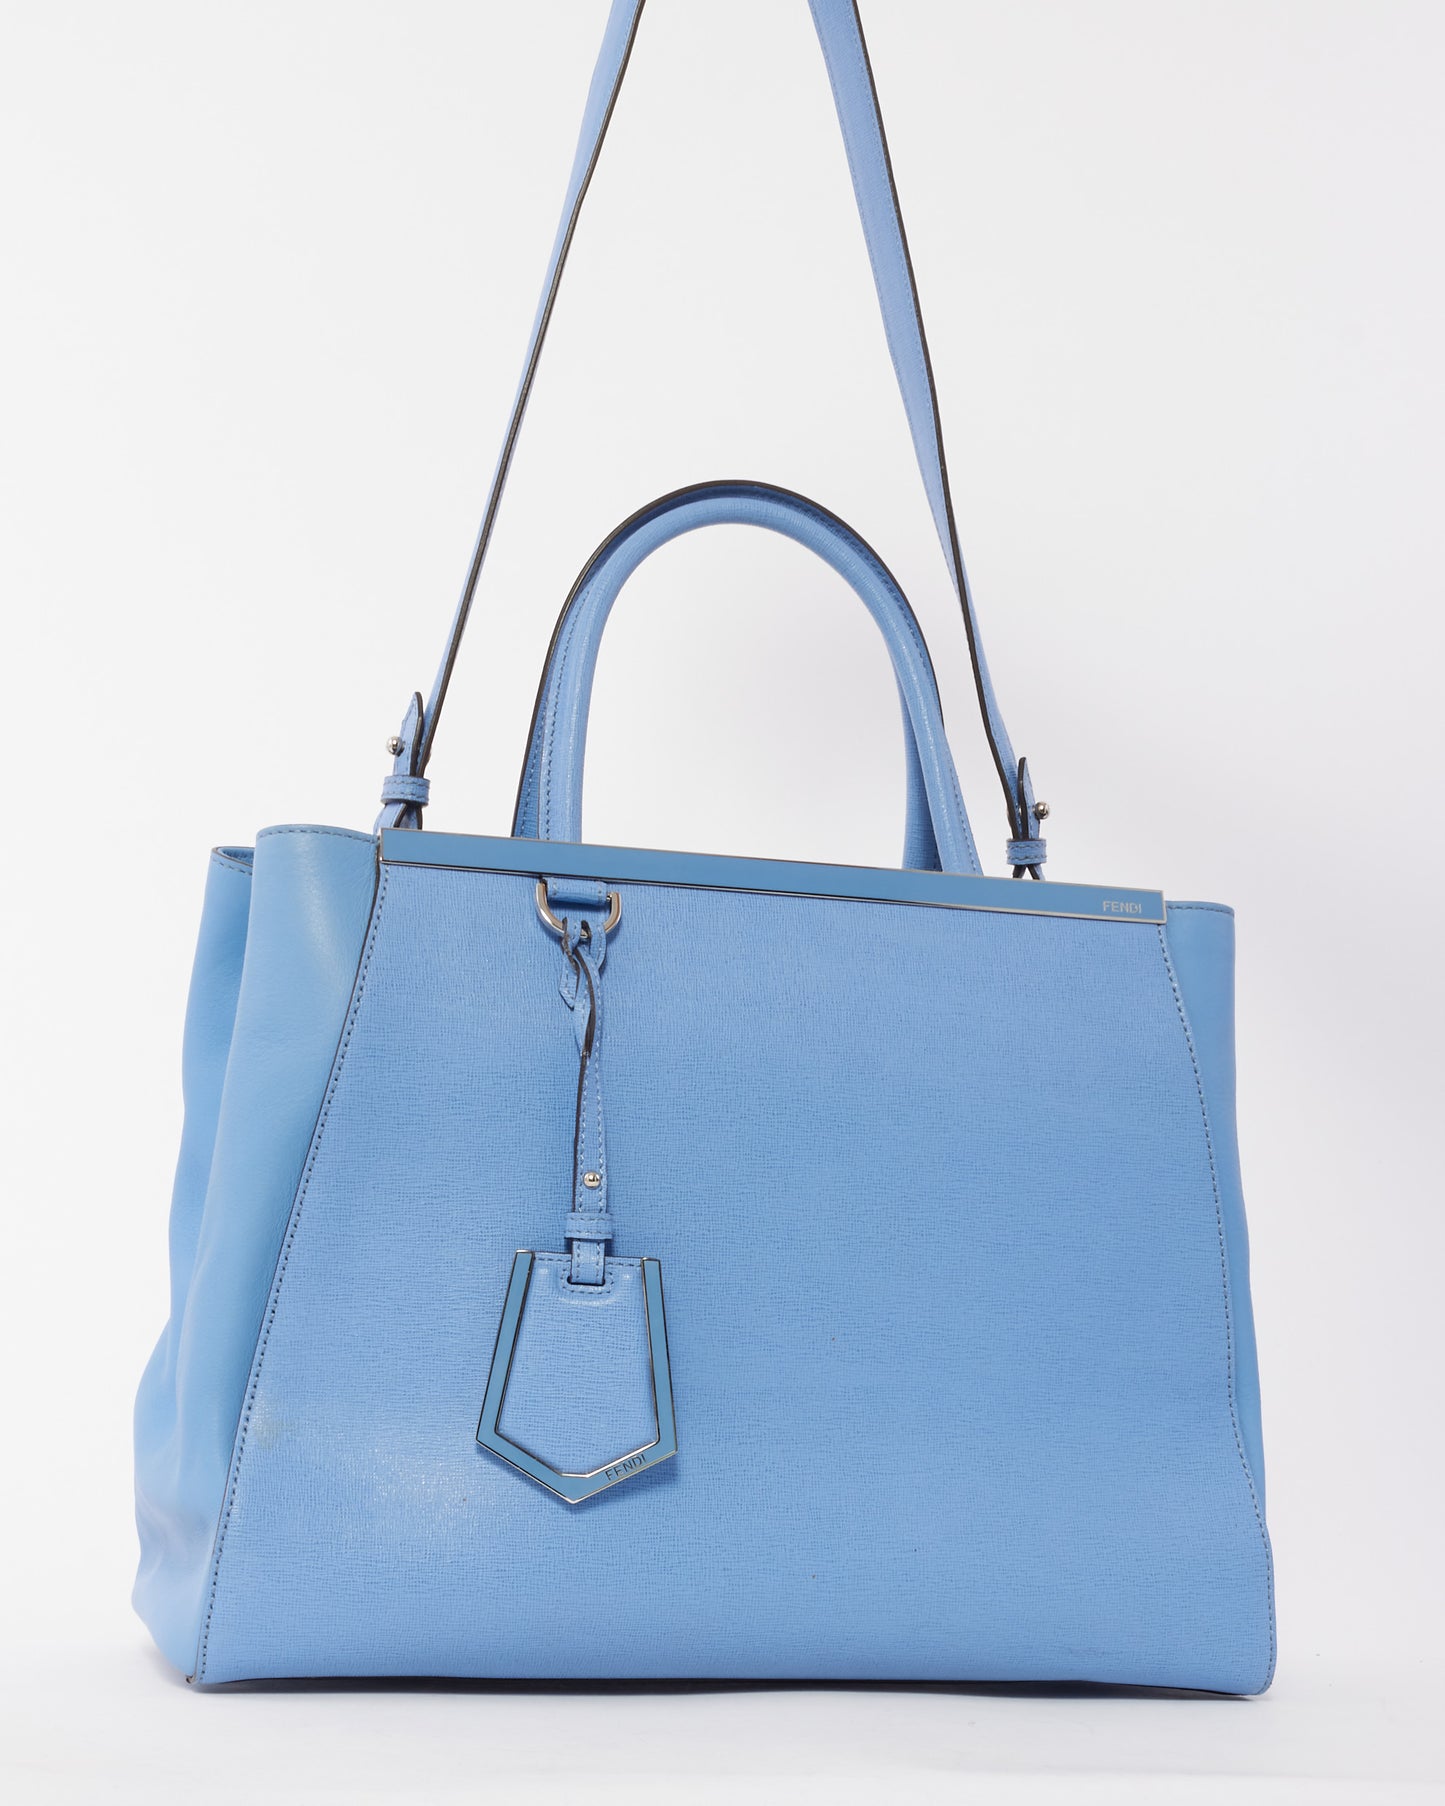 Fendi Blue Leather Medium 2Jours Tote Bag